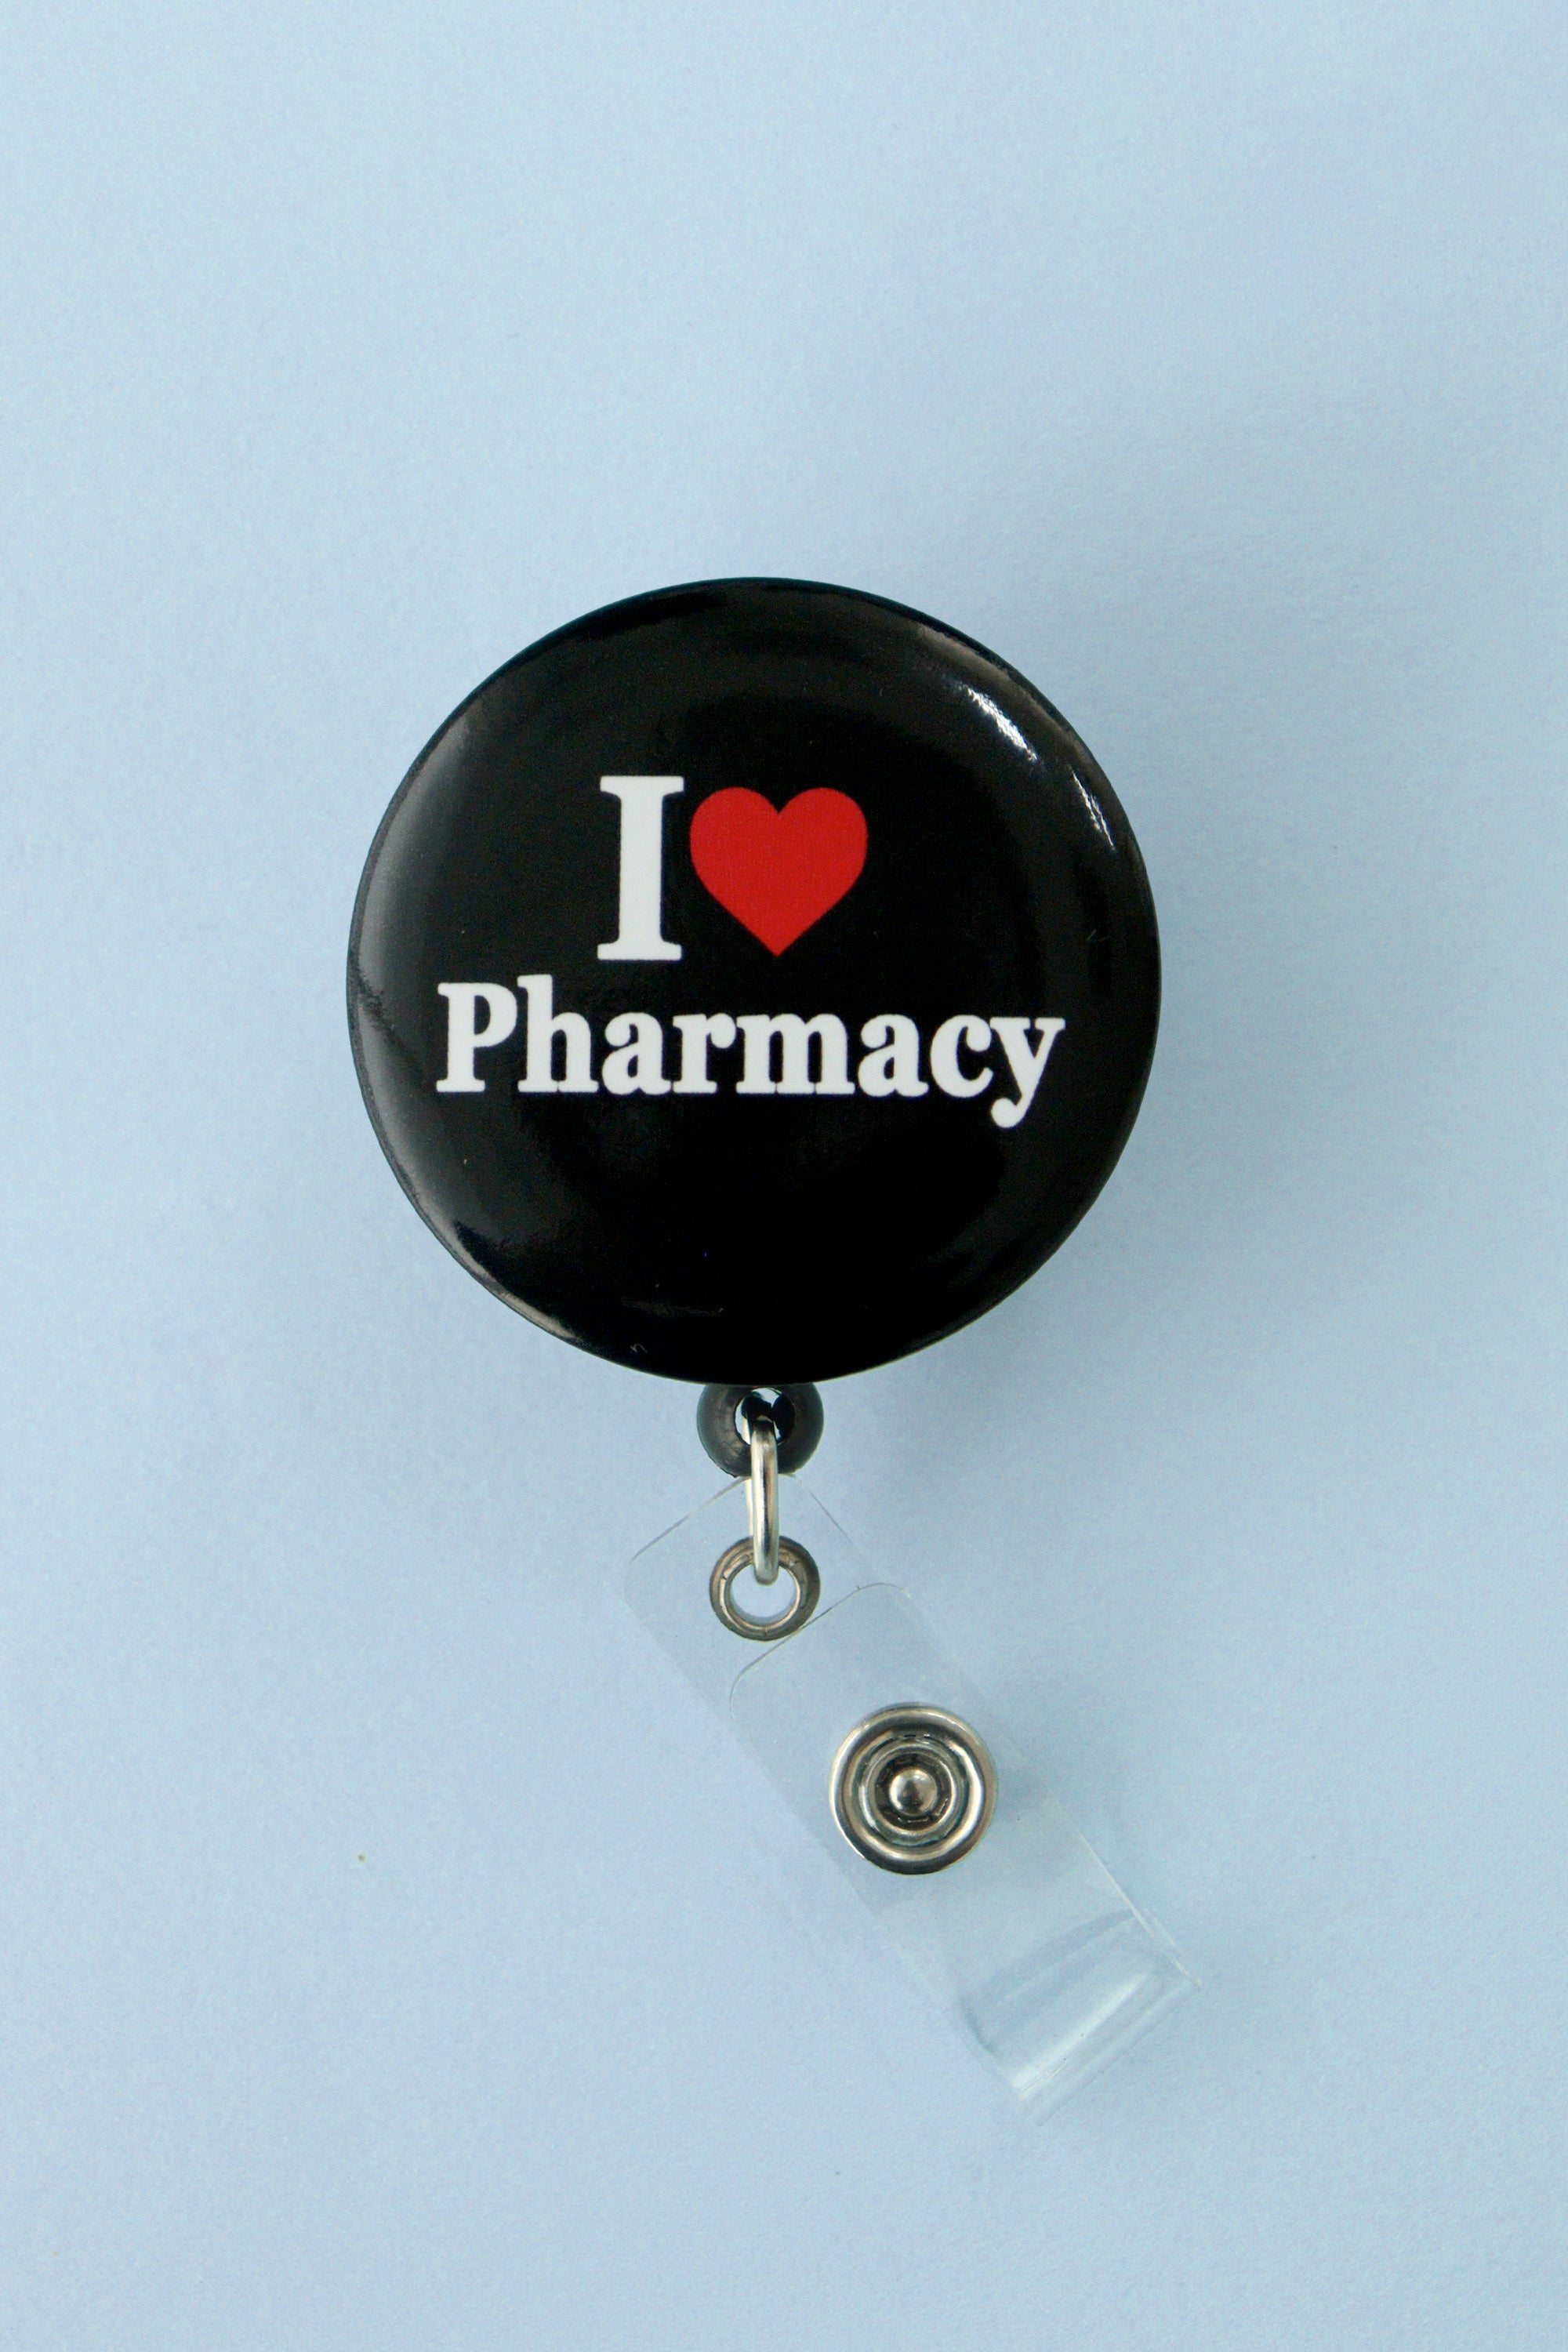 products-pharmacy1-206462-jpg